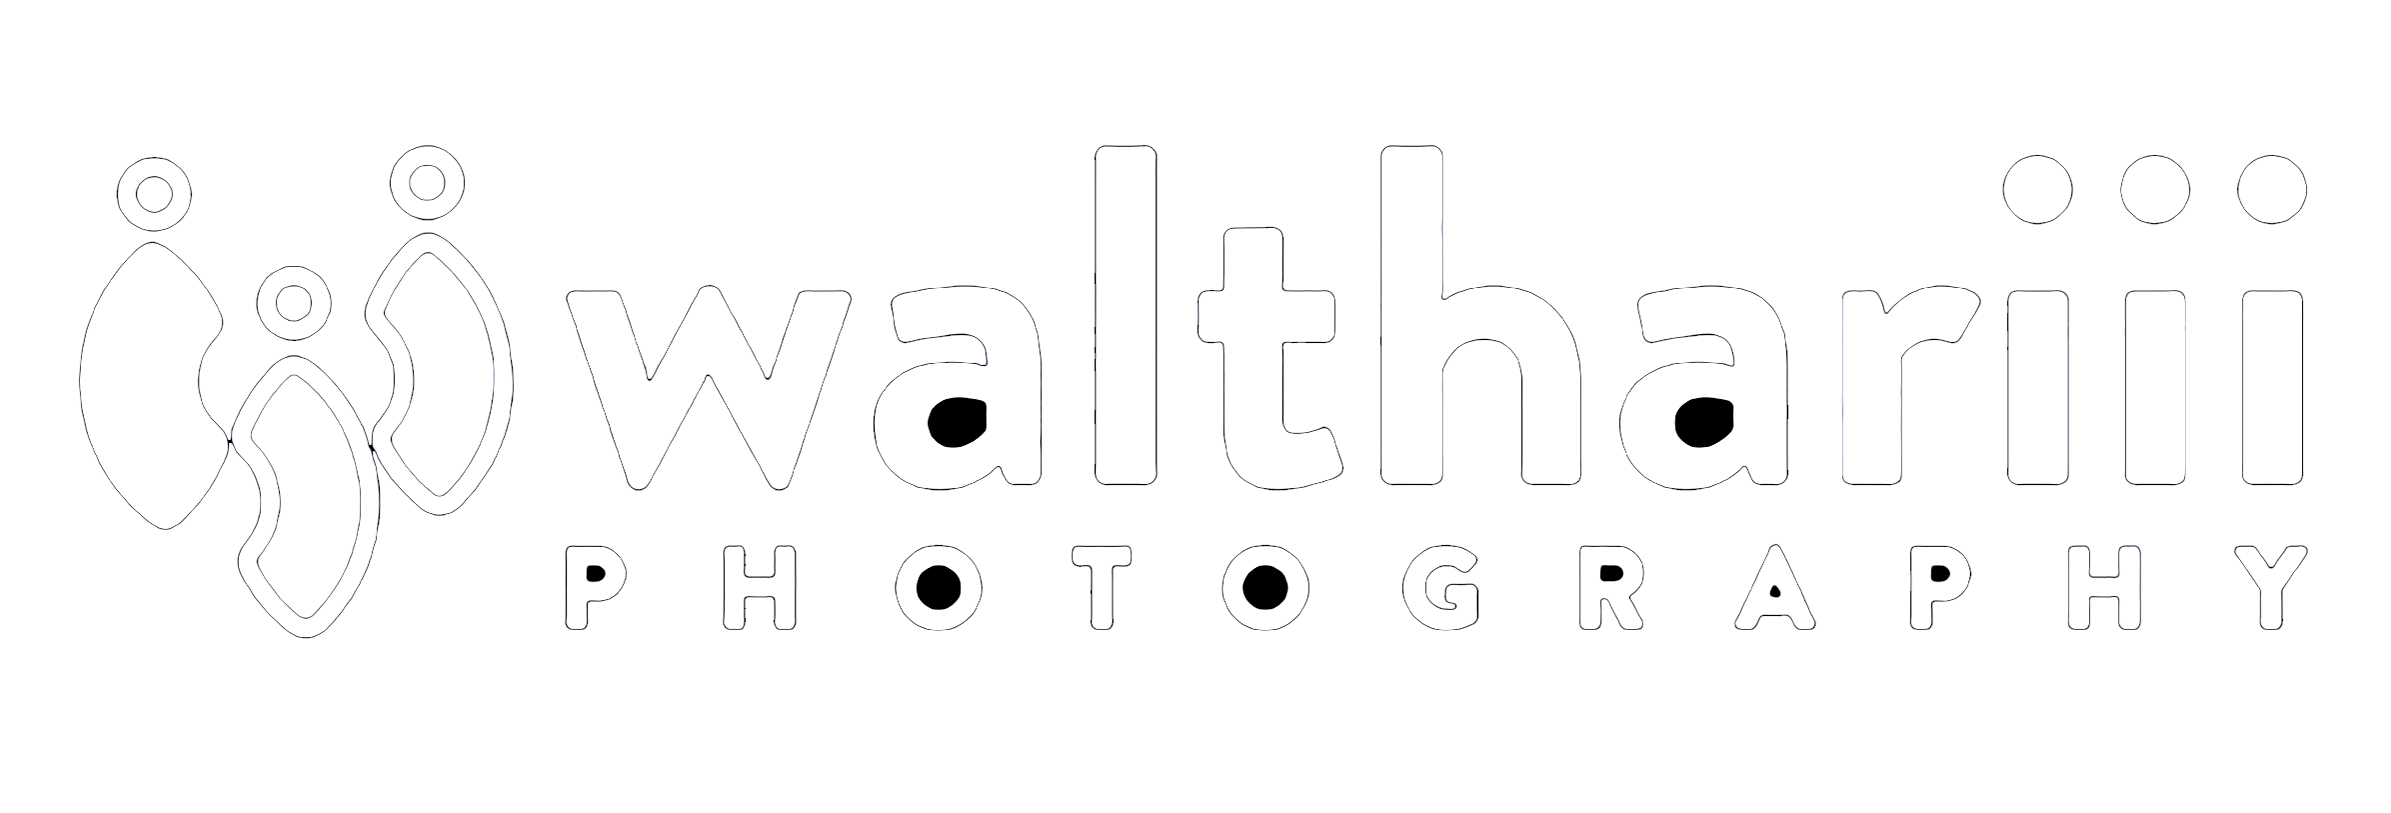 Walthariii Photography Logo